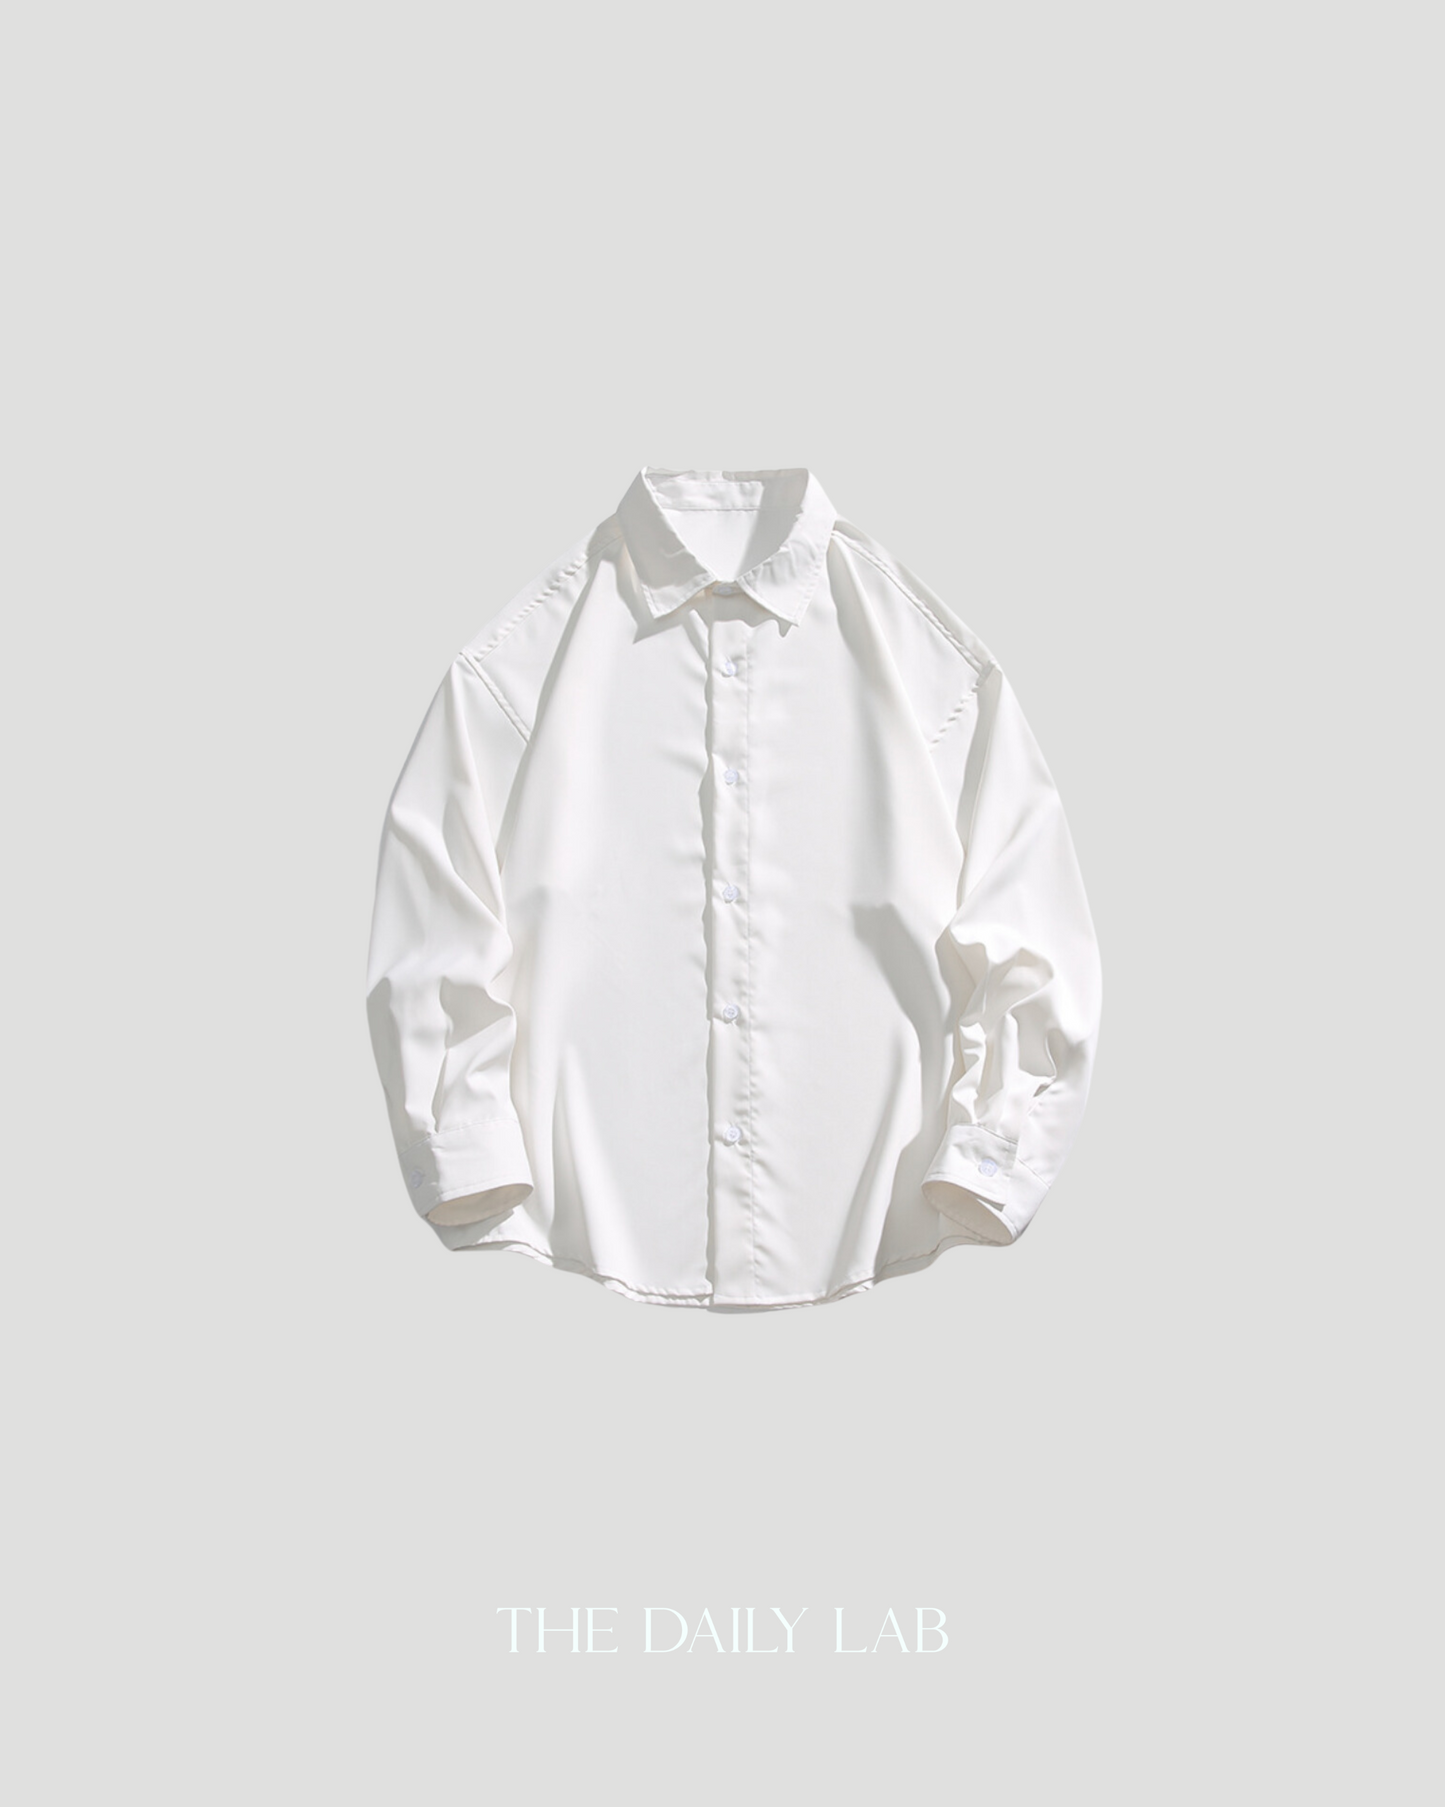 Urban Silk Swagger Shirt in White